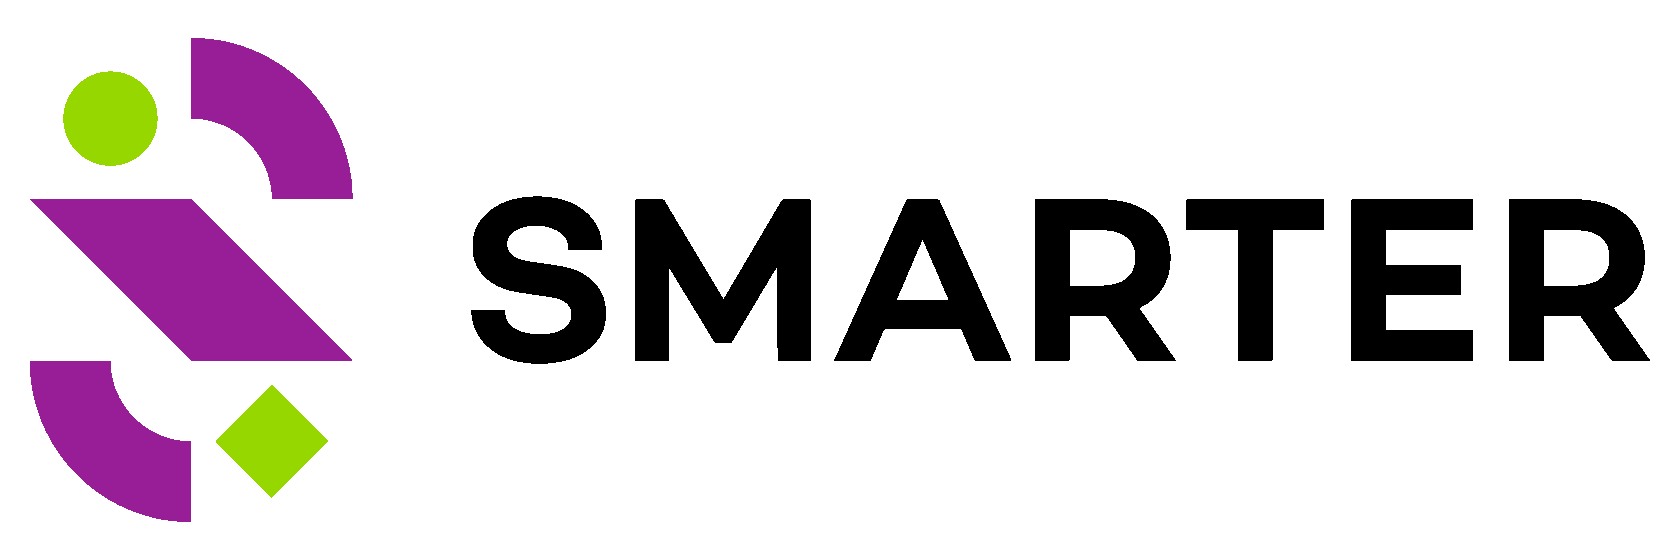 Smart means. Смартер логотип. Смартер колл центр. Модель Smarter. Логотип смарт ИТ.